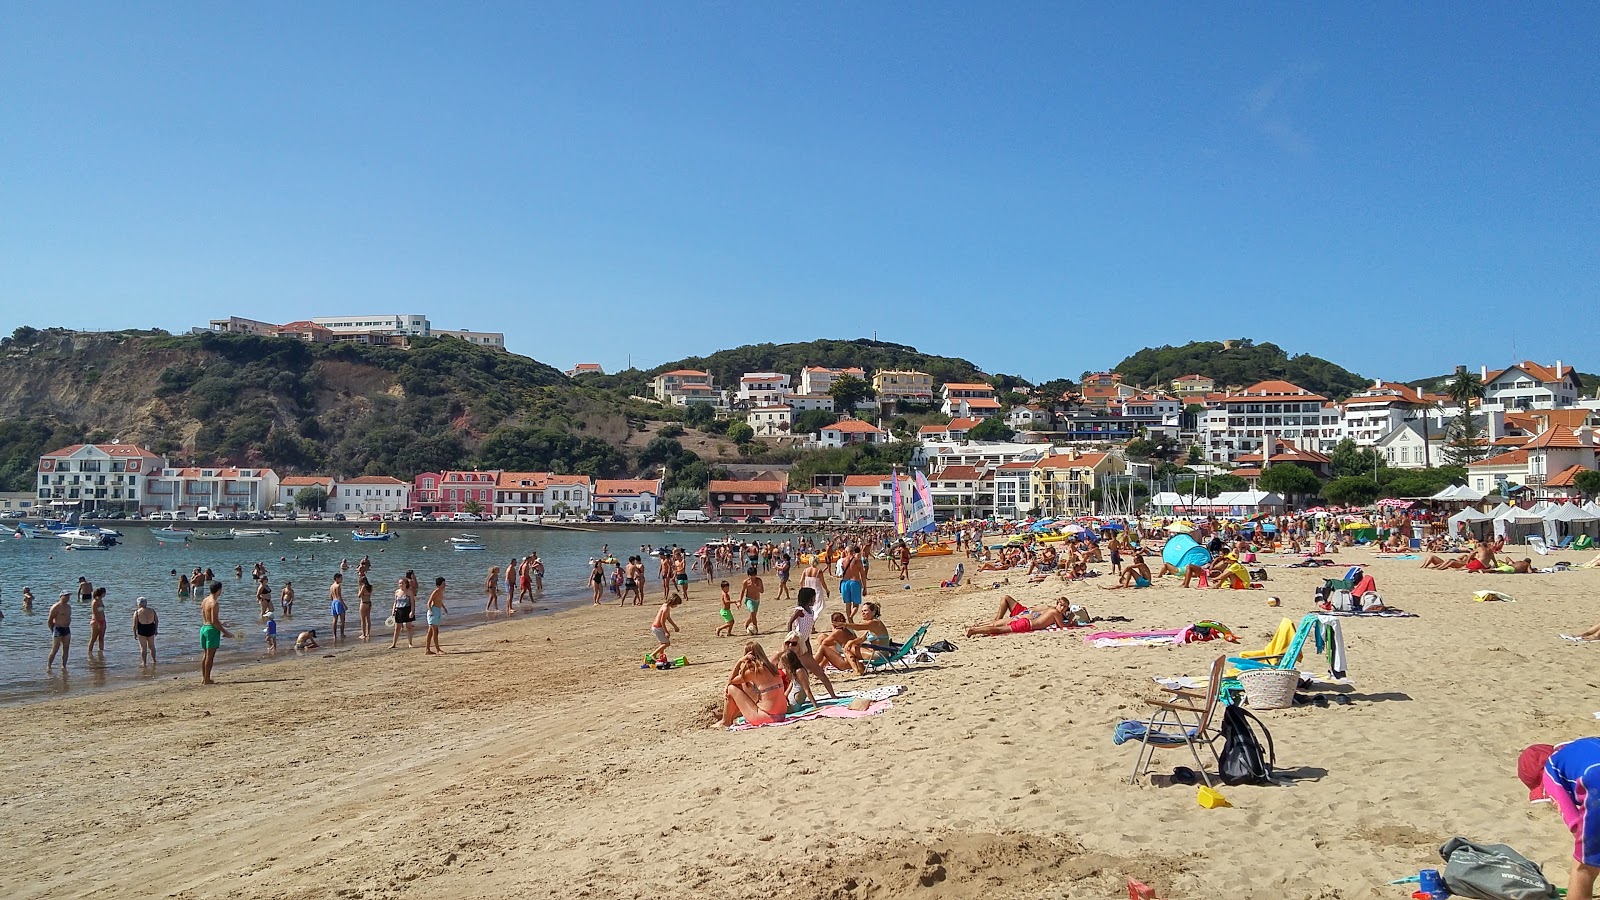 Fotografie cu Sao Martinho do Porto - locul popular printre cunoscătorii de relaxare